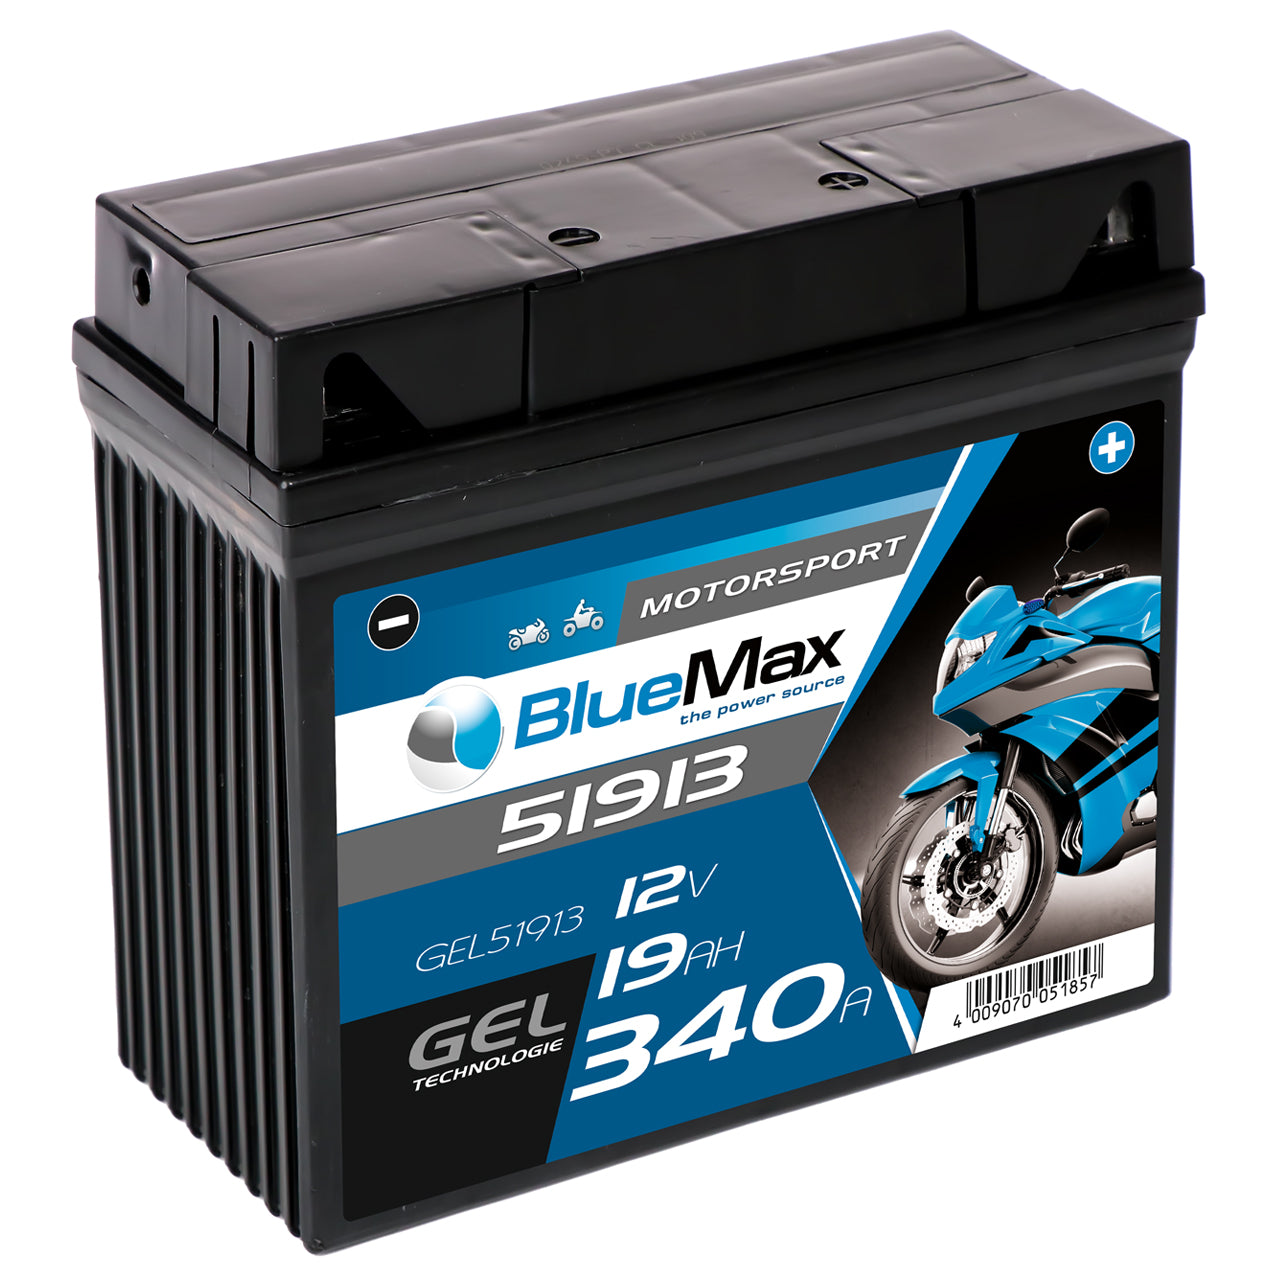 Exide G19 Bike Gel Motorradbatterie12V 19Ah 170A DIN 51913 inkl. 7,50€ Pfand